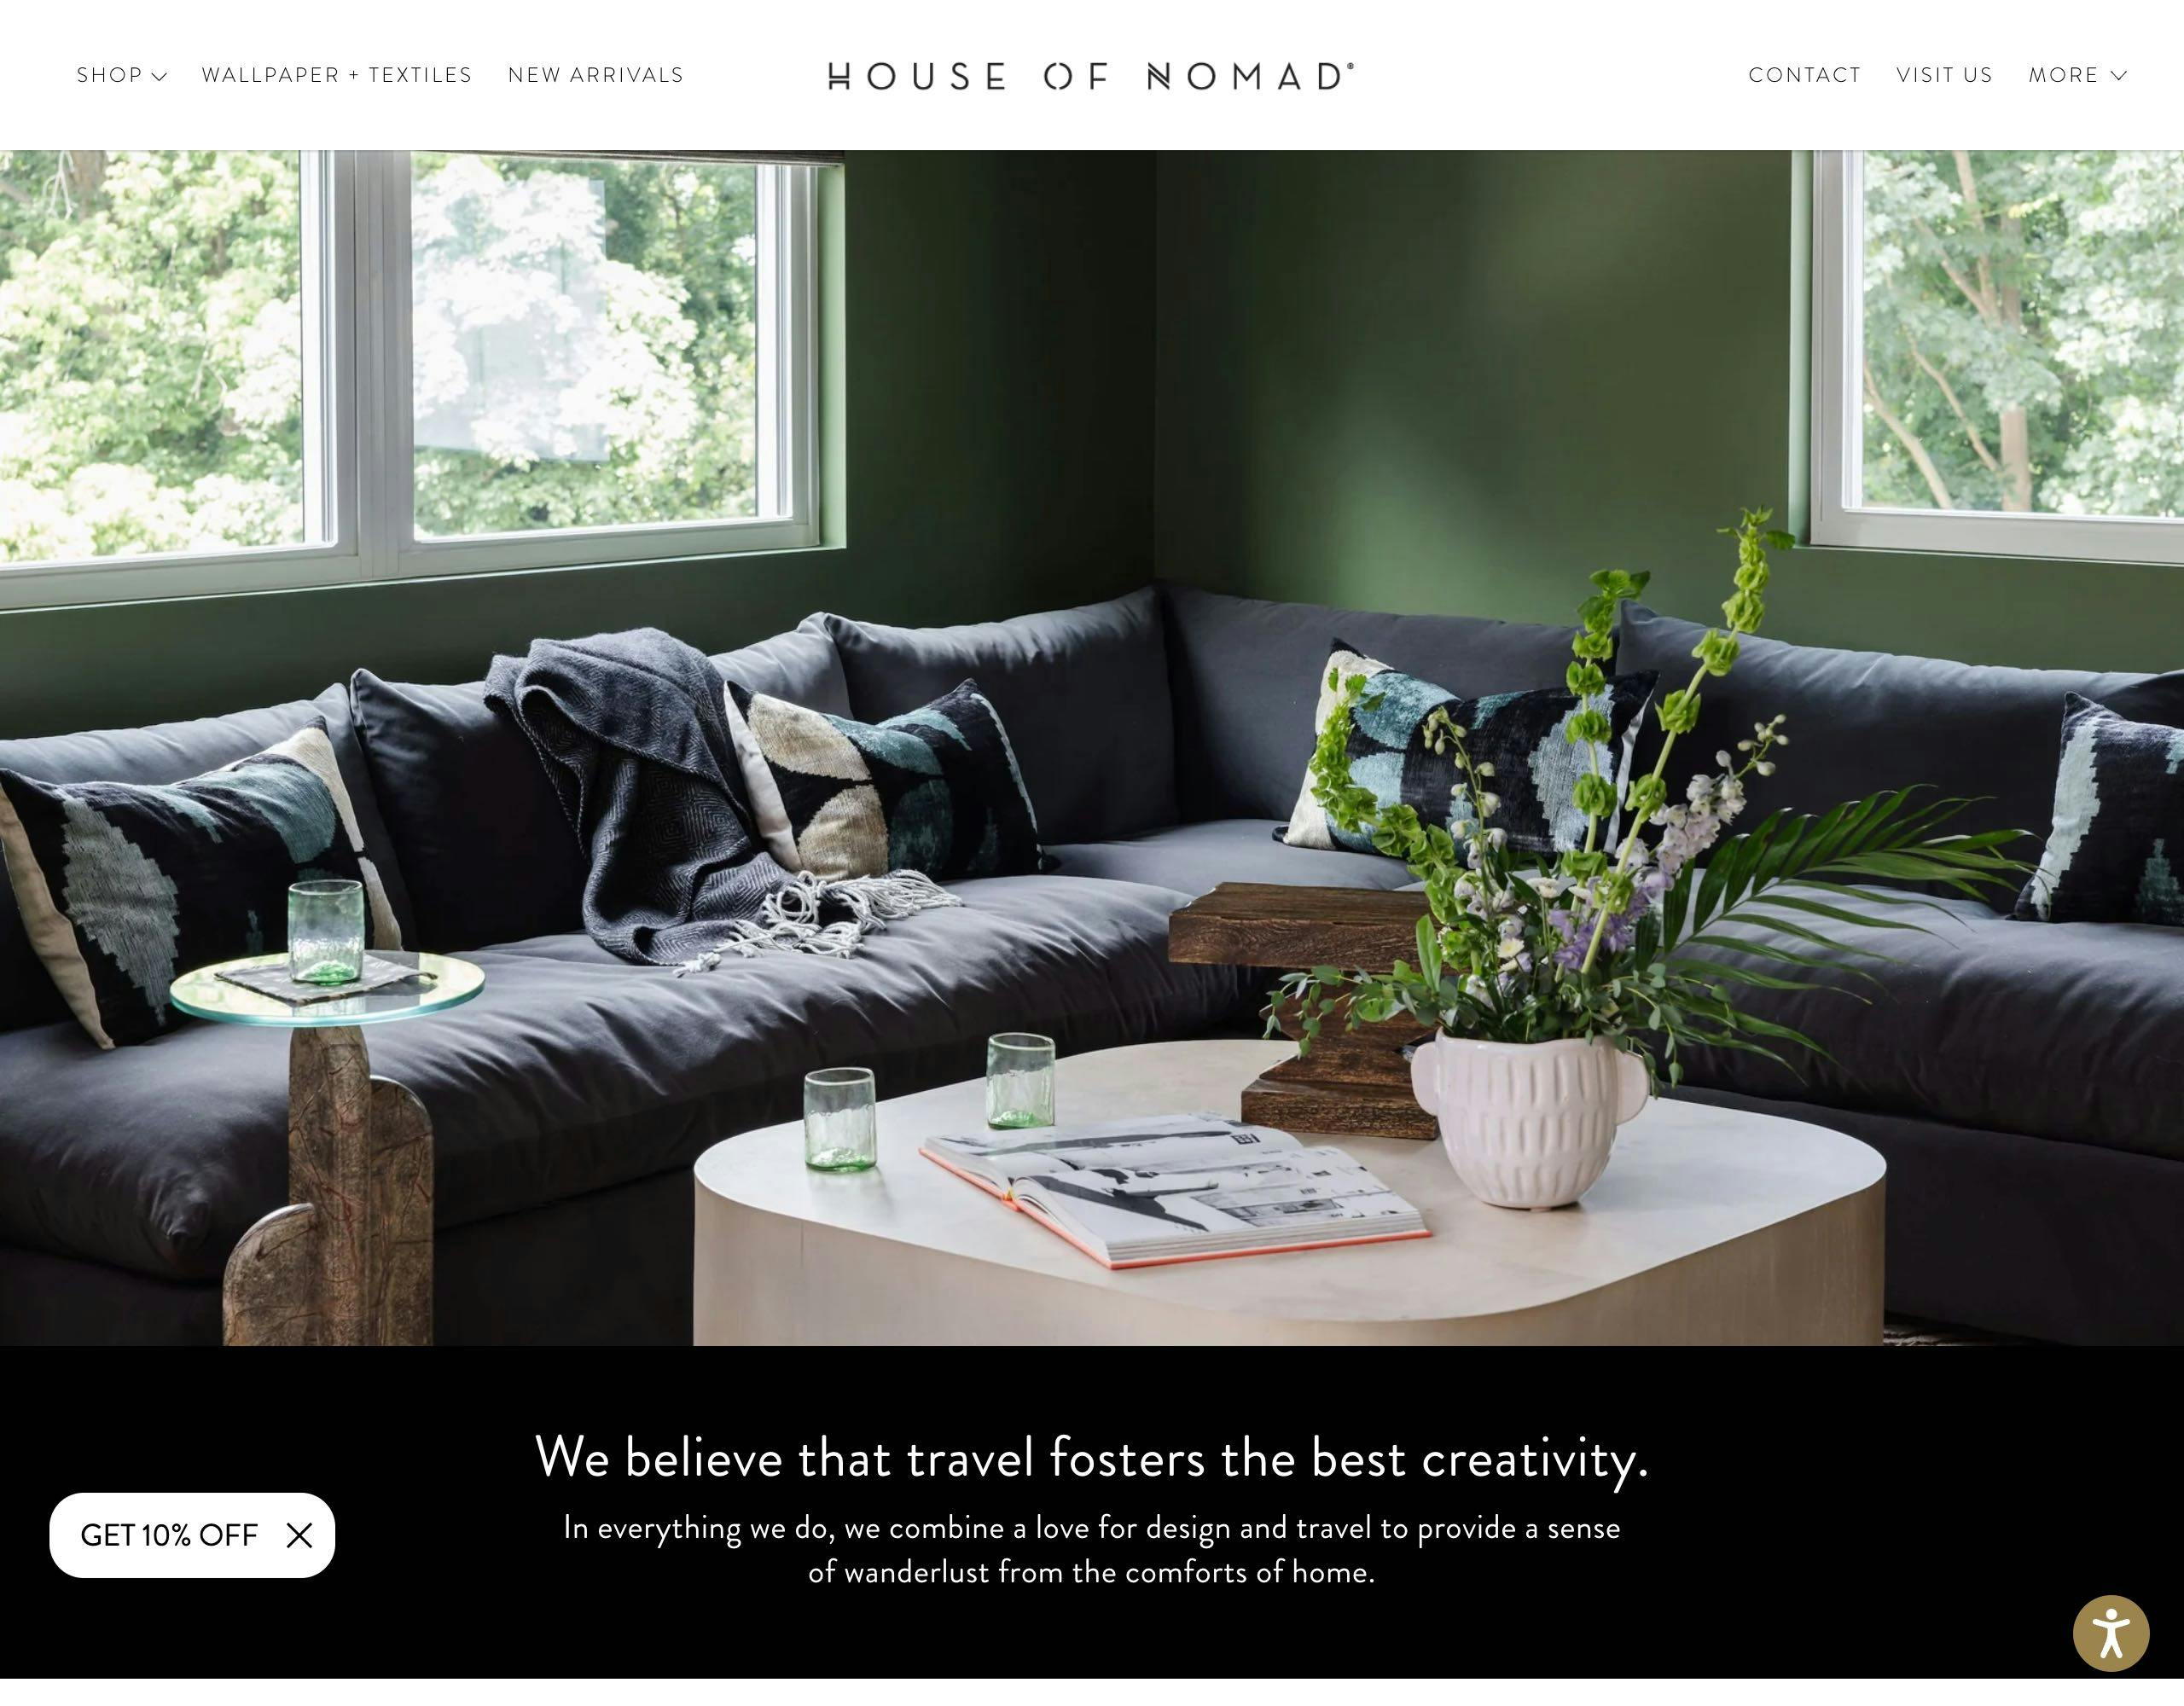 House of nomad website